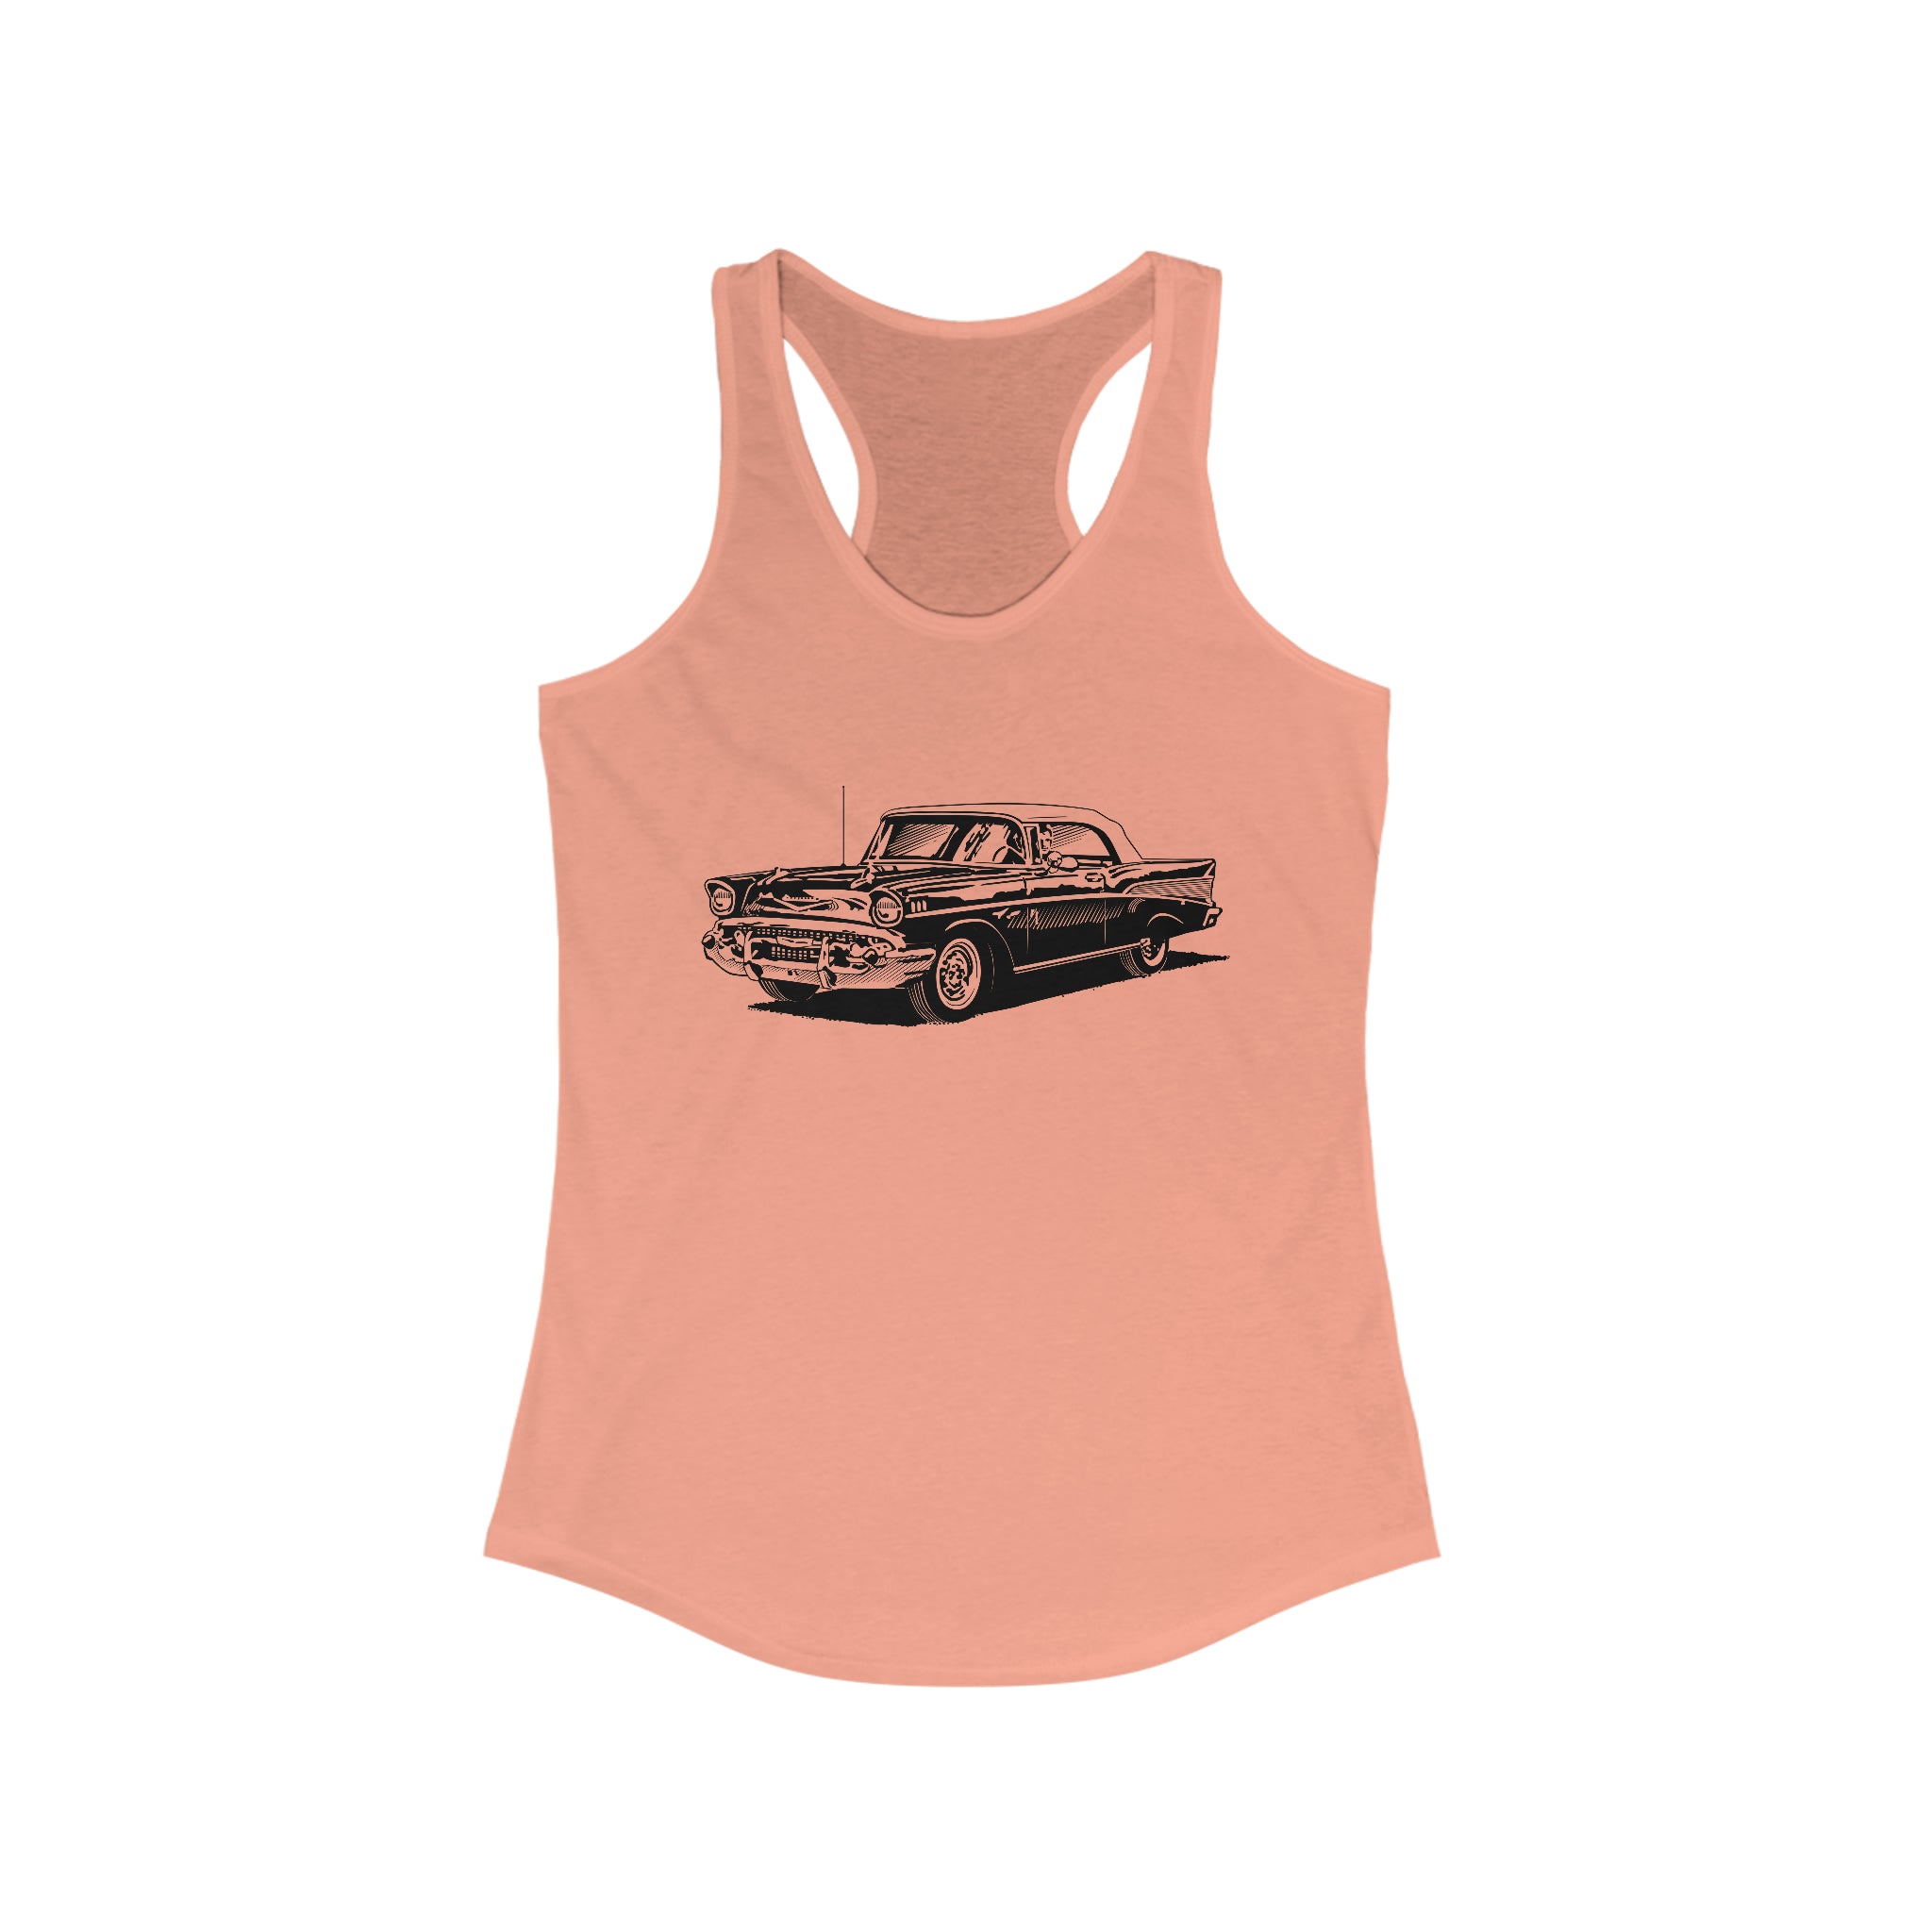 Vintage Car - Women's Ideal Racerback Tank